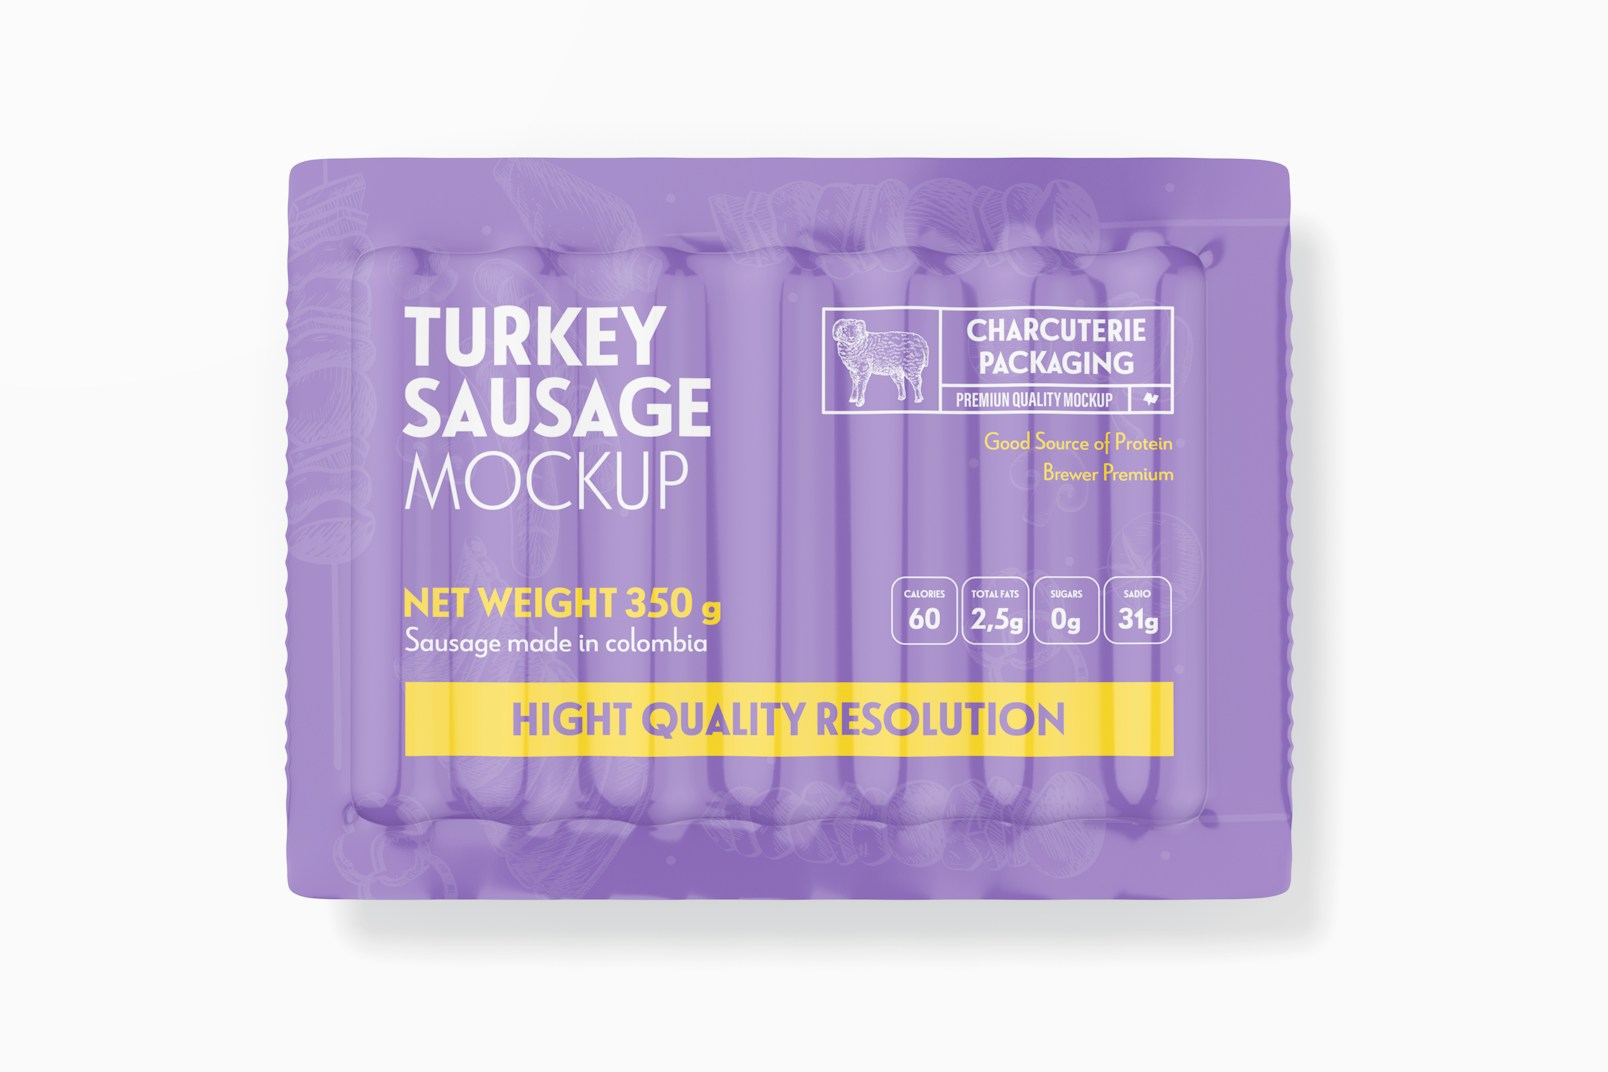 Turkey Sausage Packaging Mockup, Top View